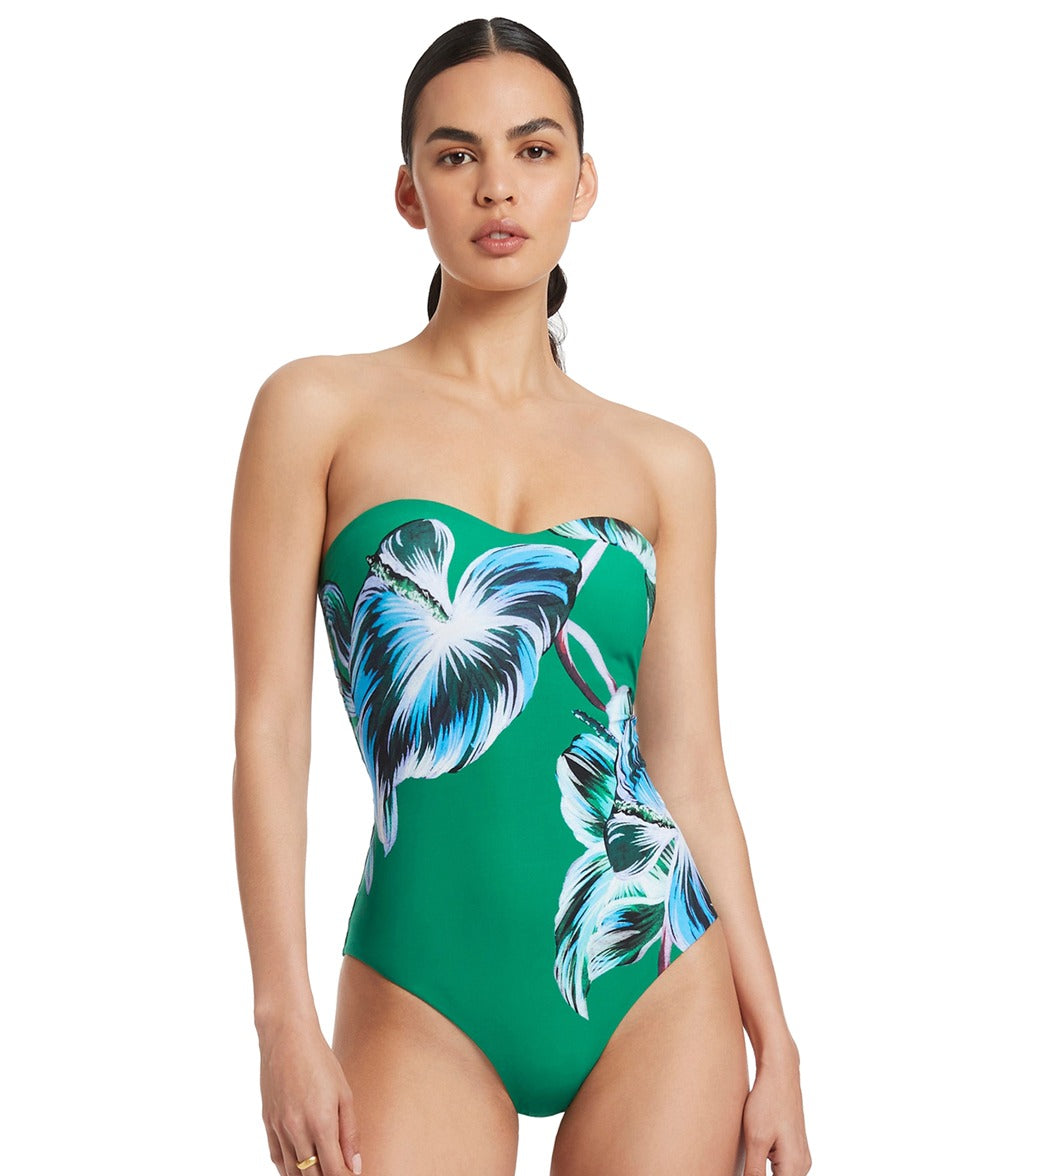 Jets Swimwear Australia Womens Viva Leaf Bandeau One Piece Swimsuit